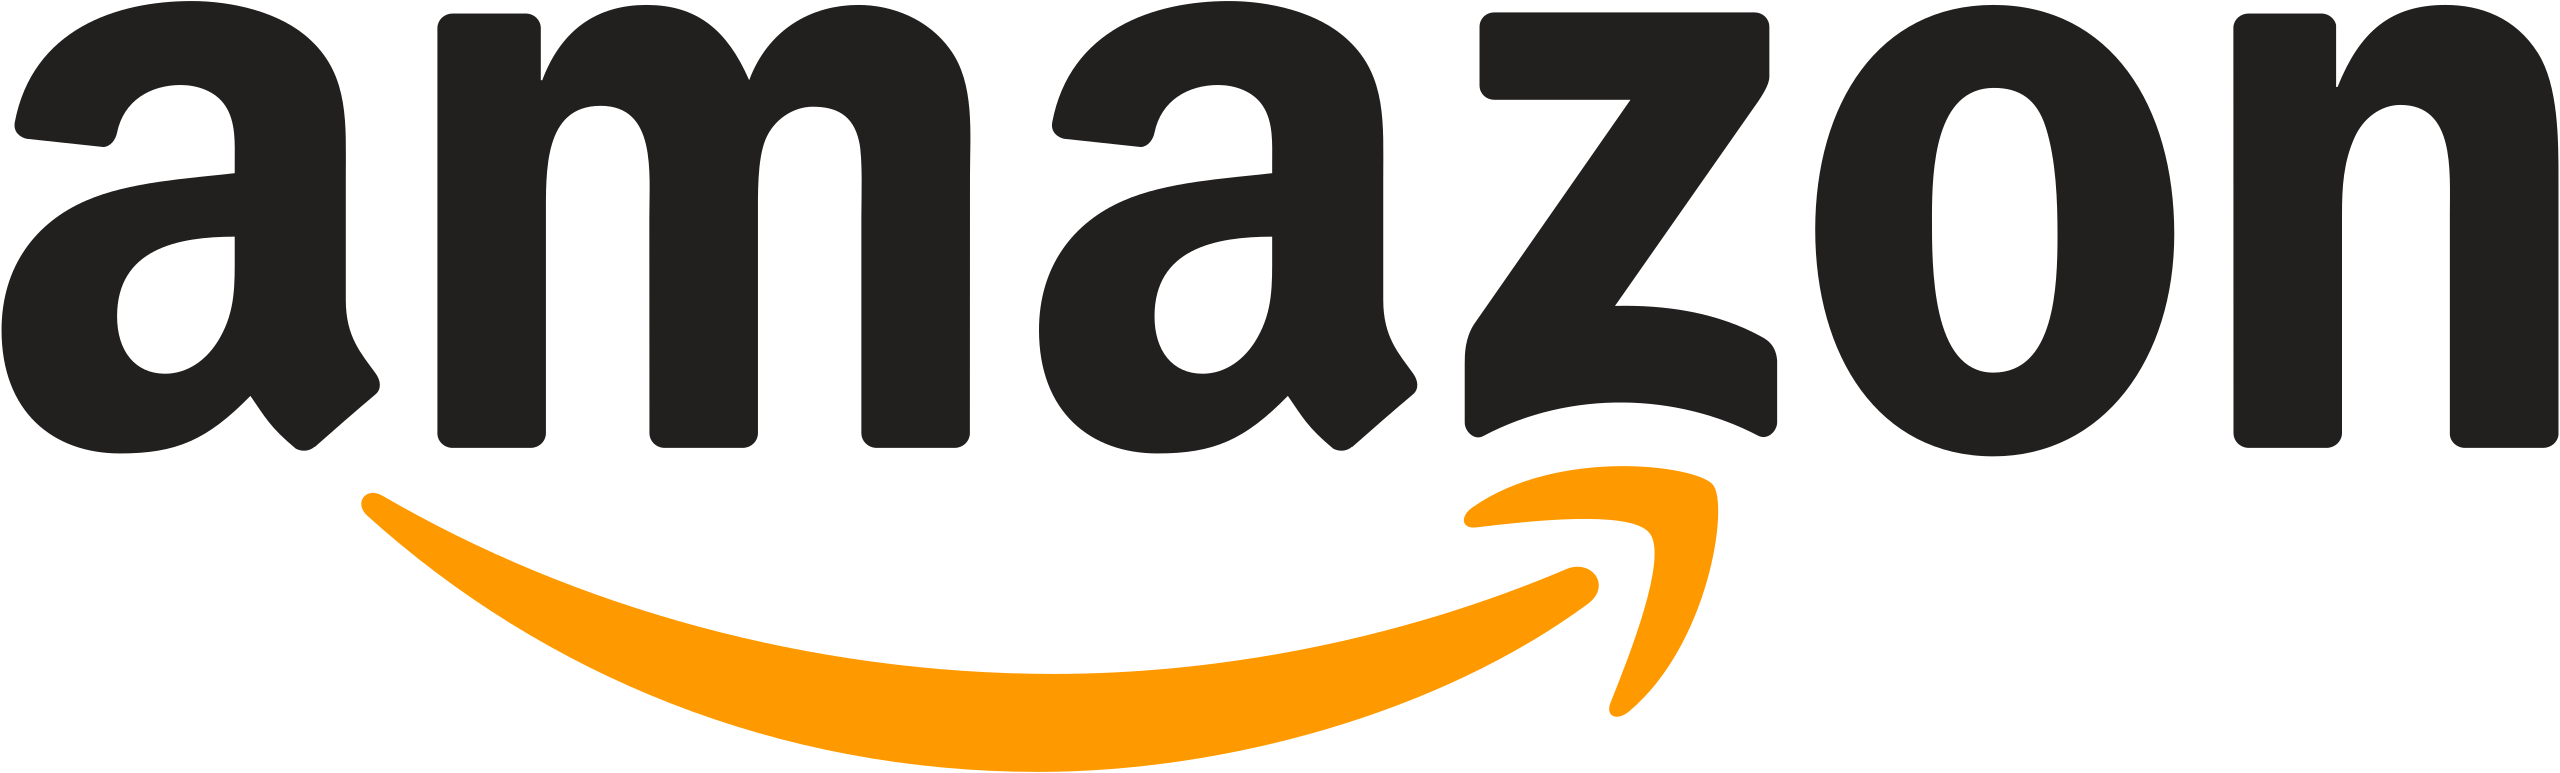 Archivo:Amazon logo.svg - Wikipedia, la enciclopedia libre